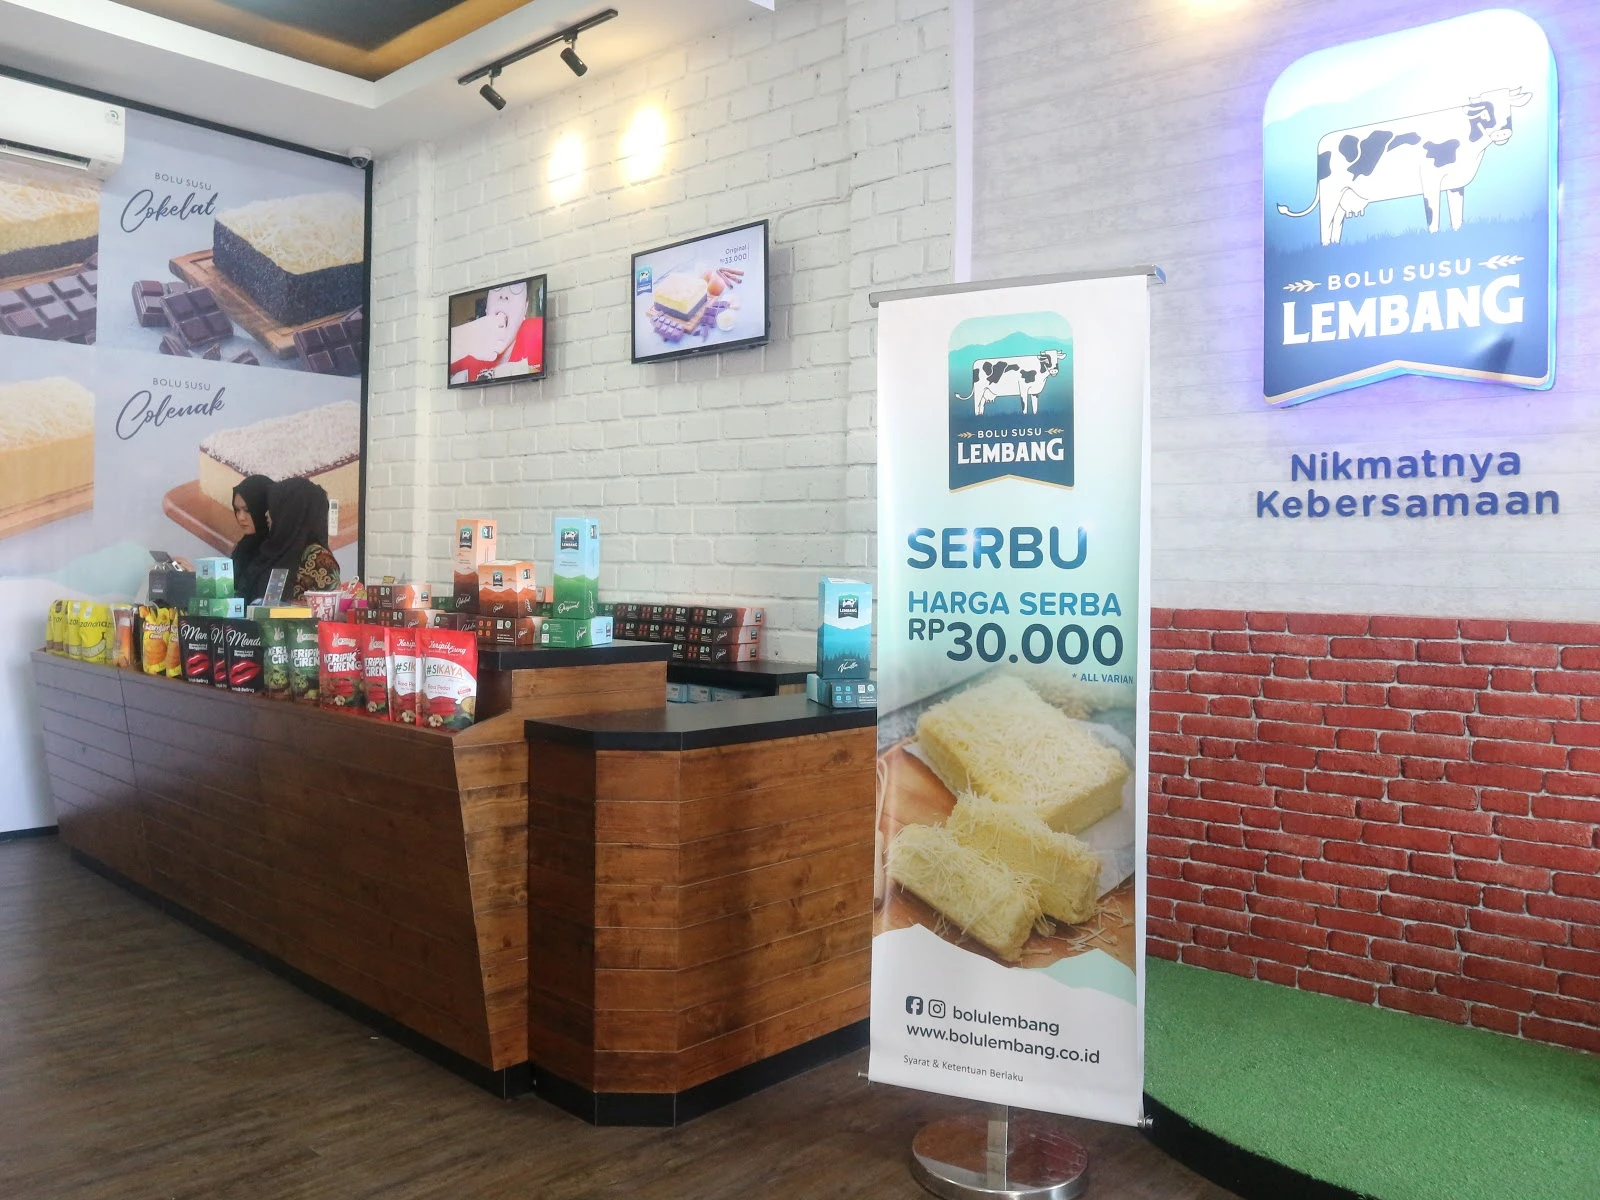 Lokasi Outlet Bolu Susu Lembang di Bandung